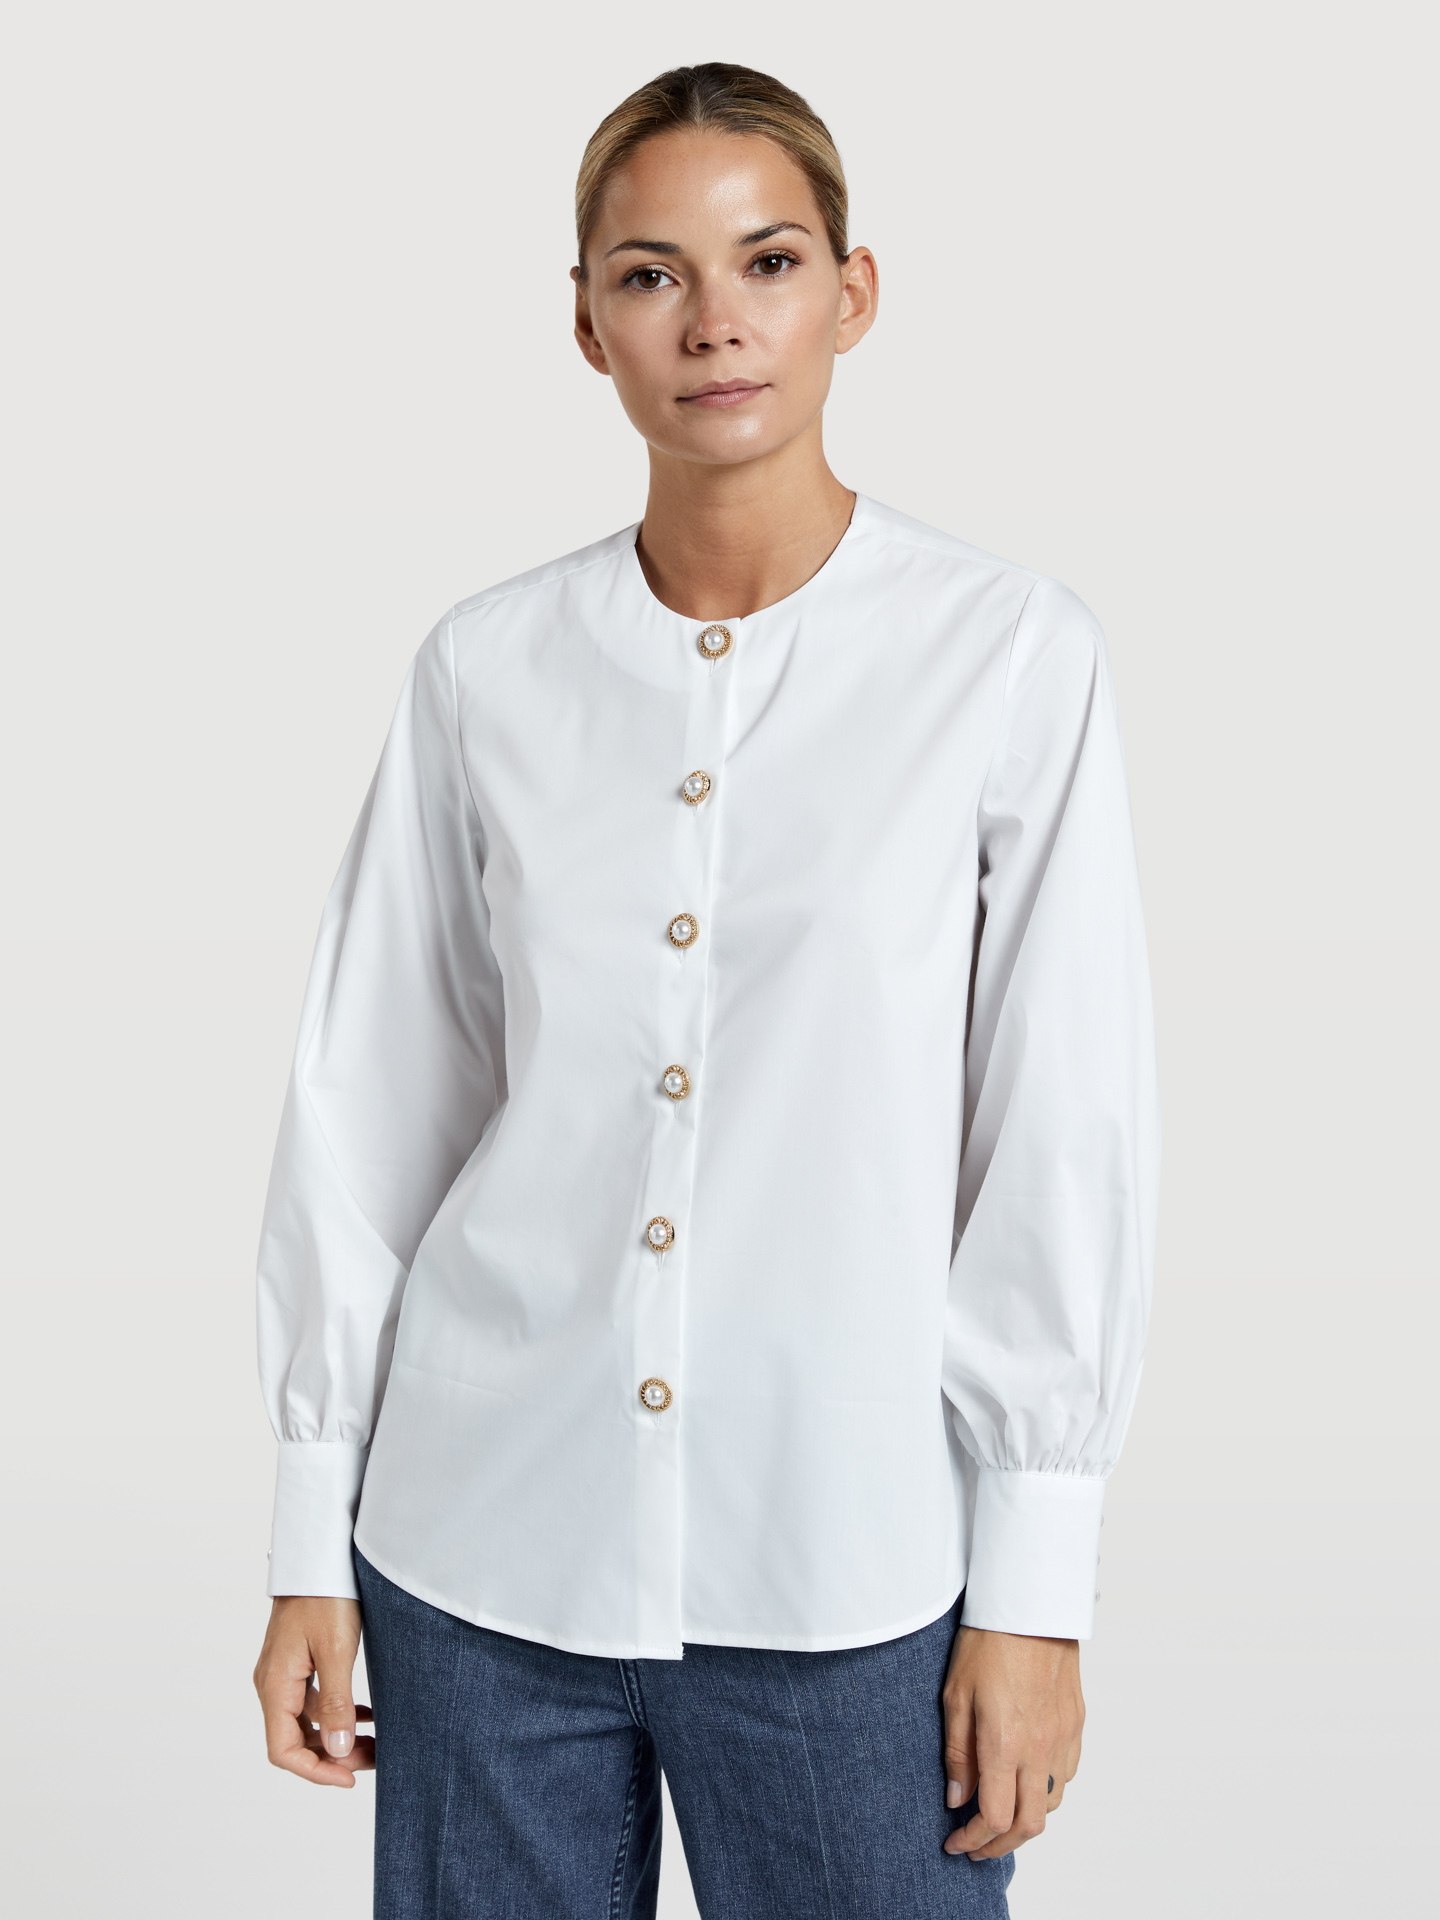 Shirt Sport White Casual Woman